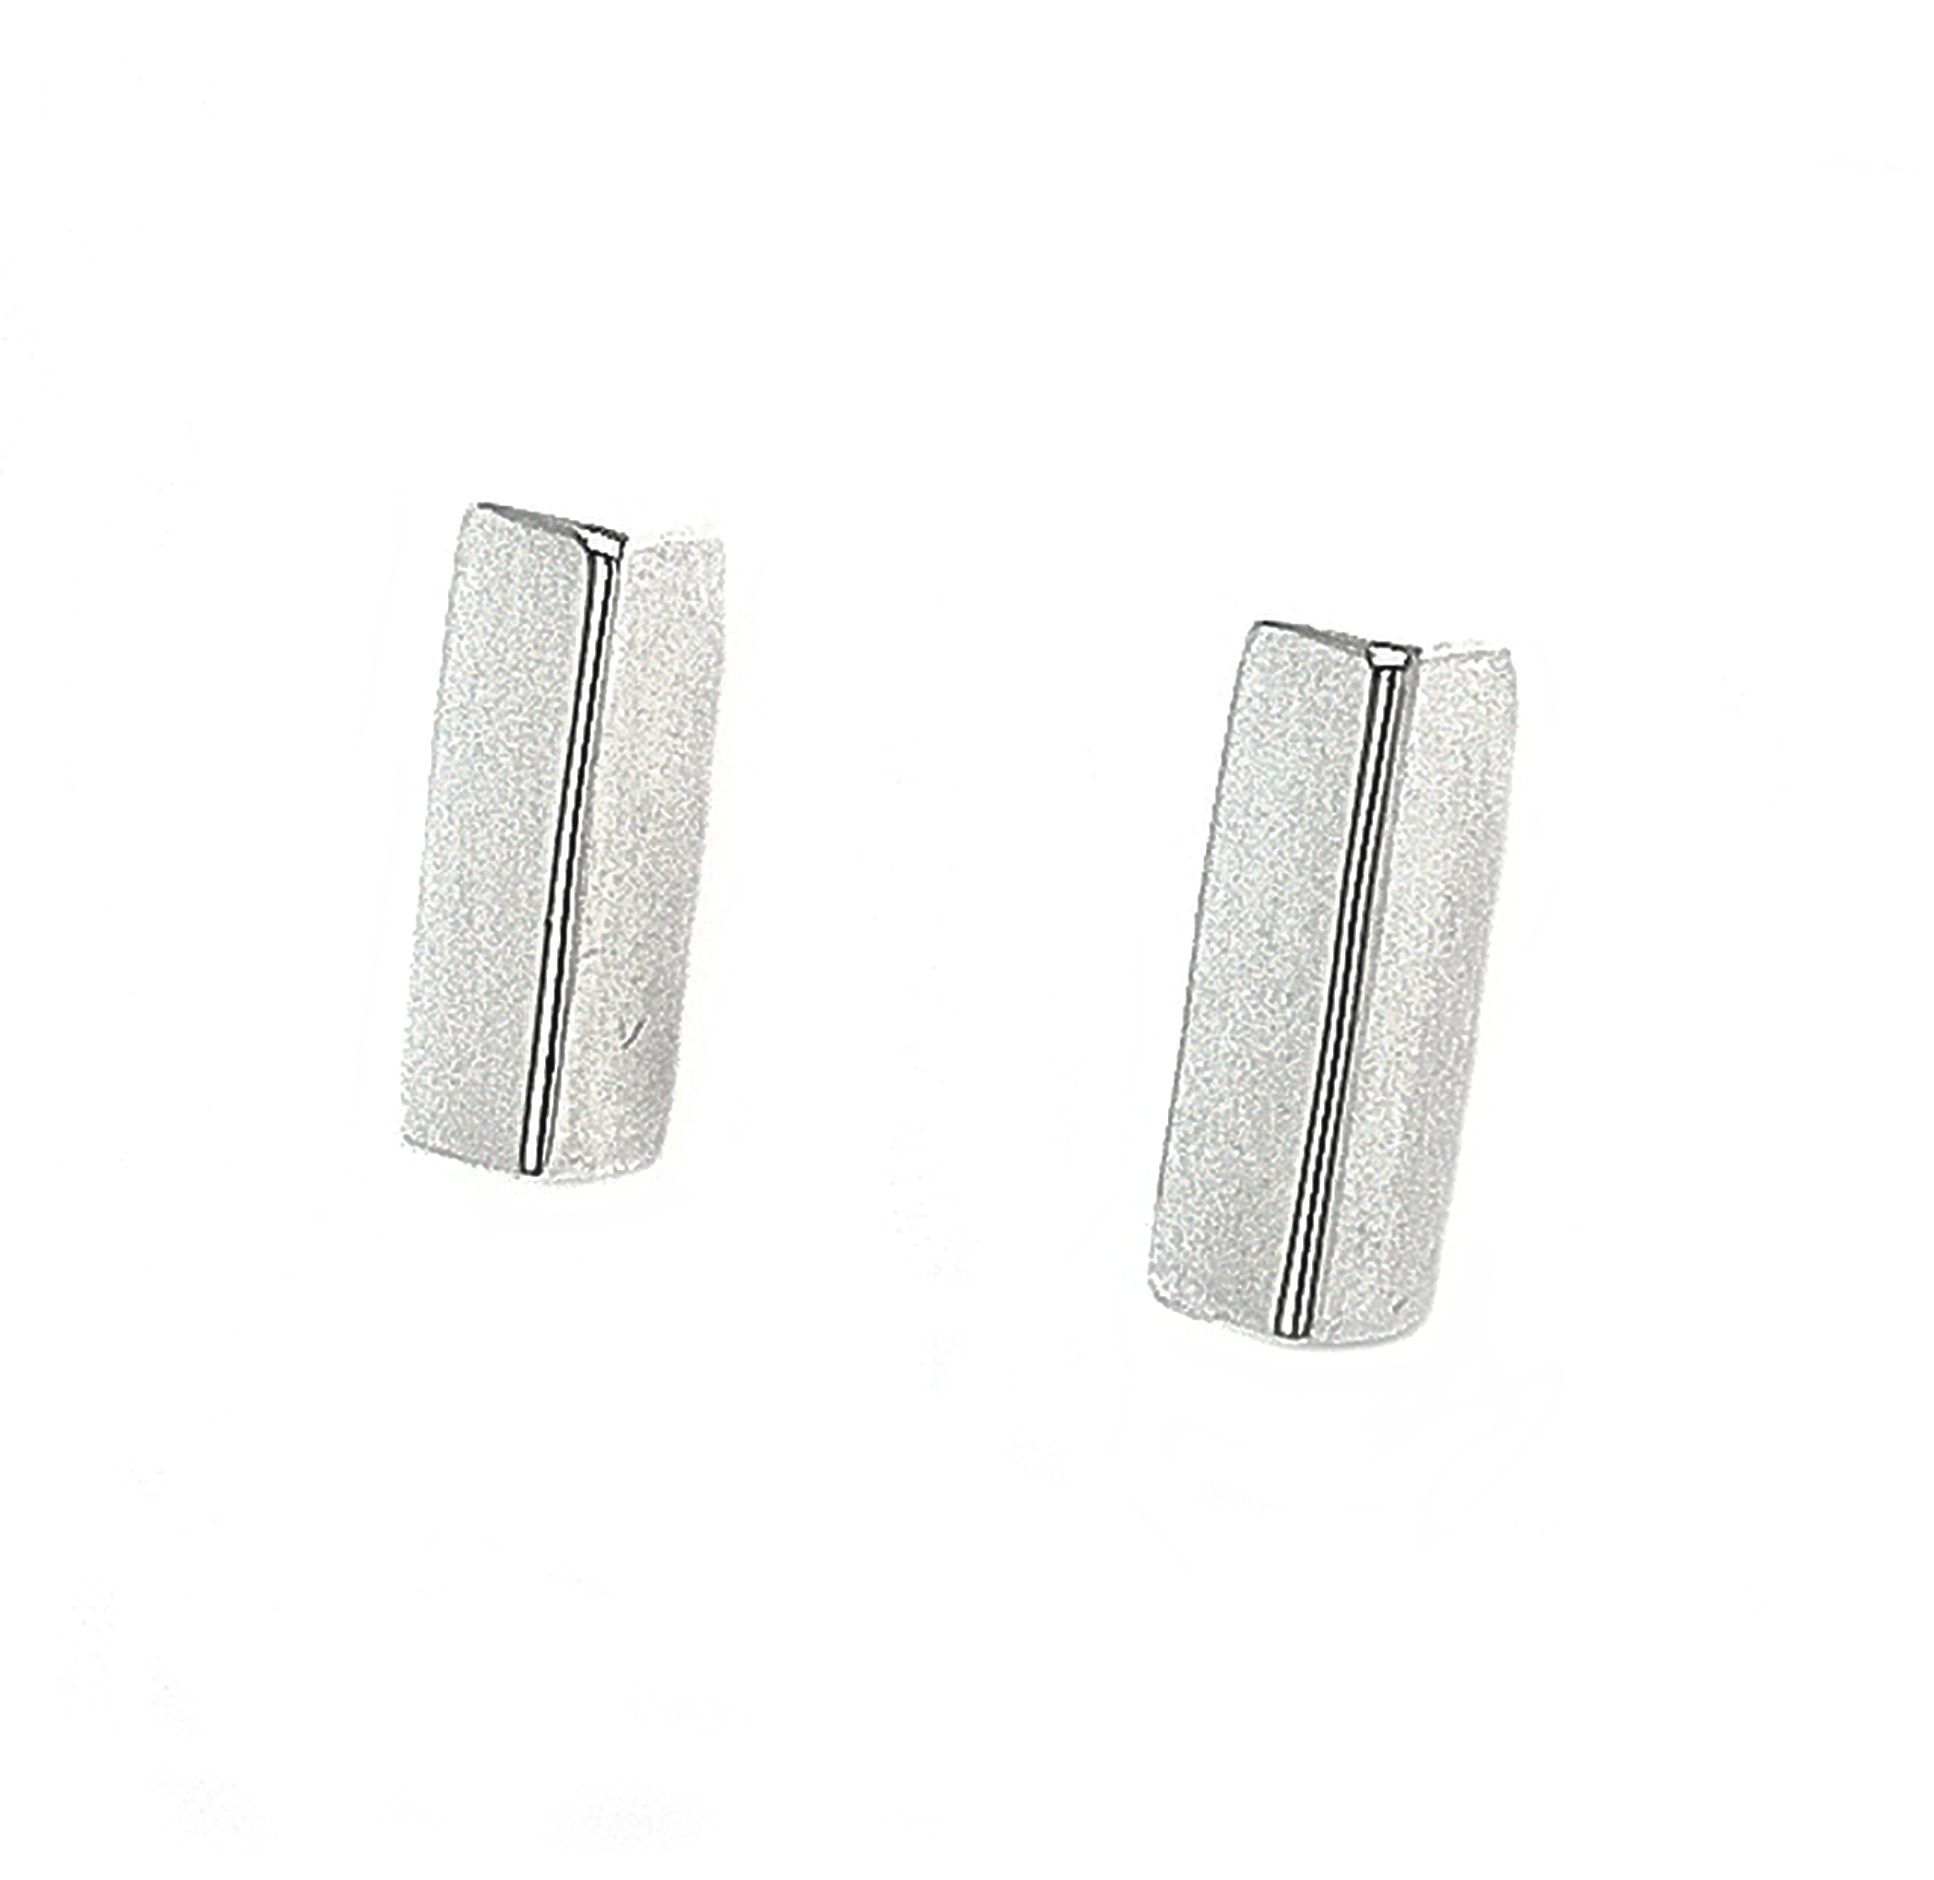 Silver Polished Rectangular Stud earrings